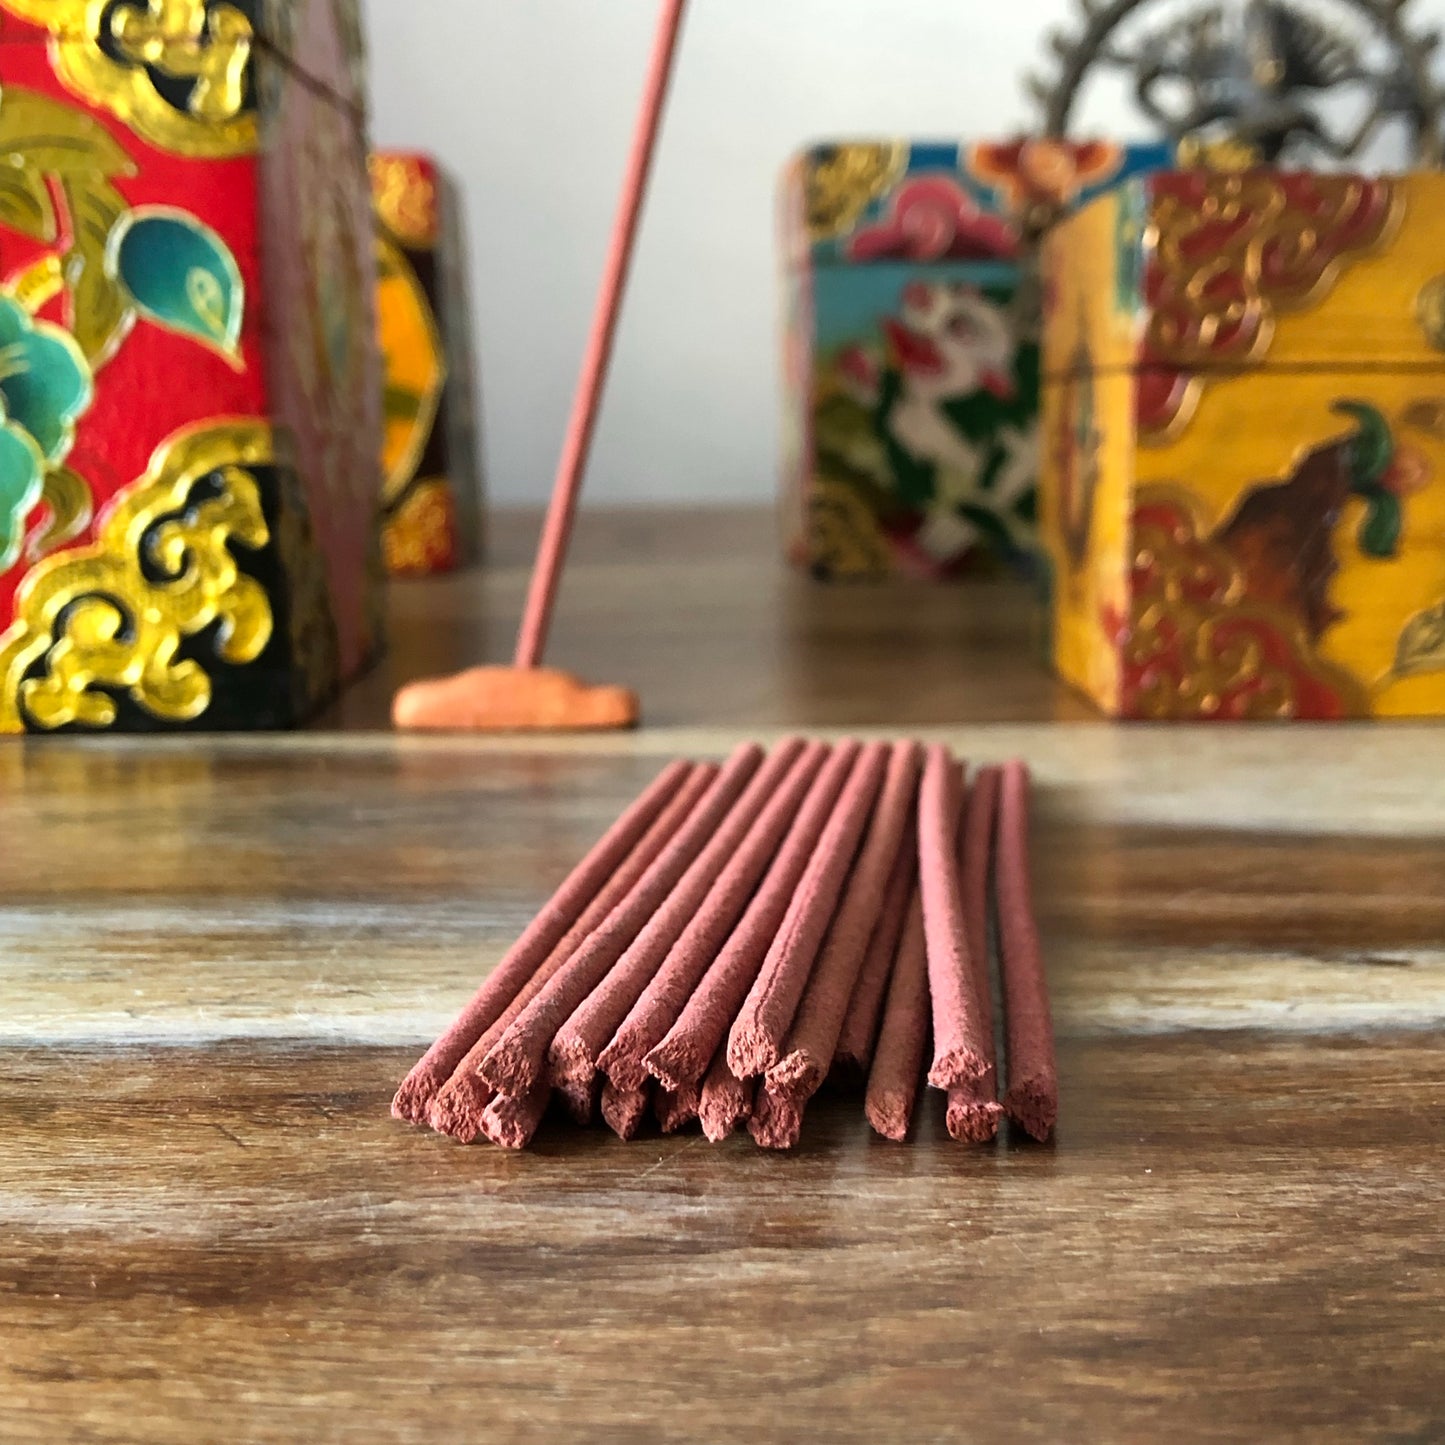 Gangchen Himalayan incense Spiritual Home Harmony and Joy